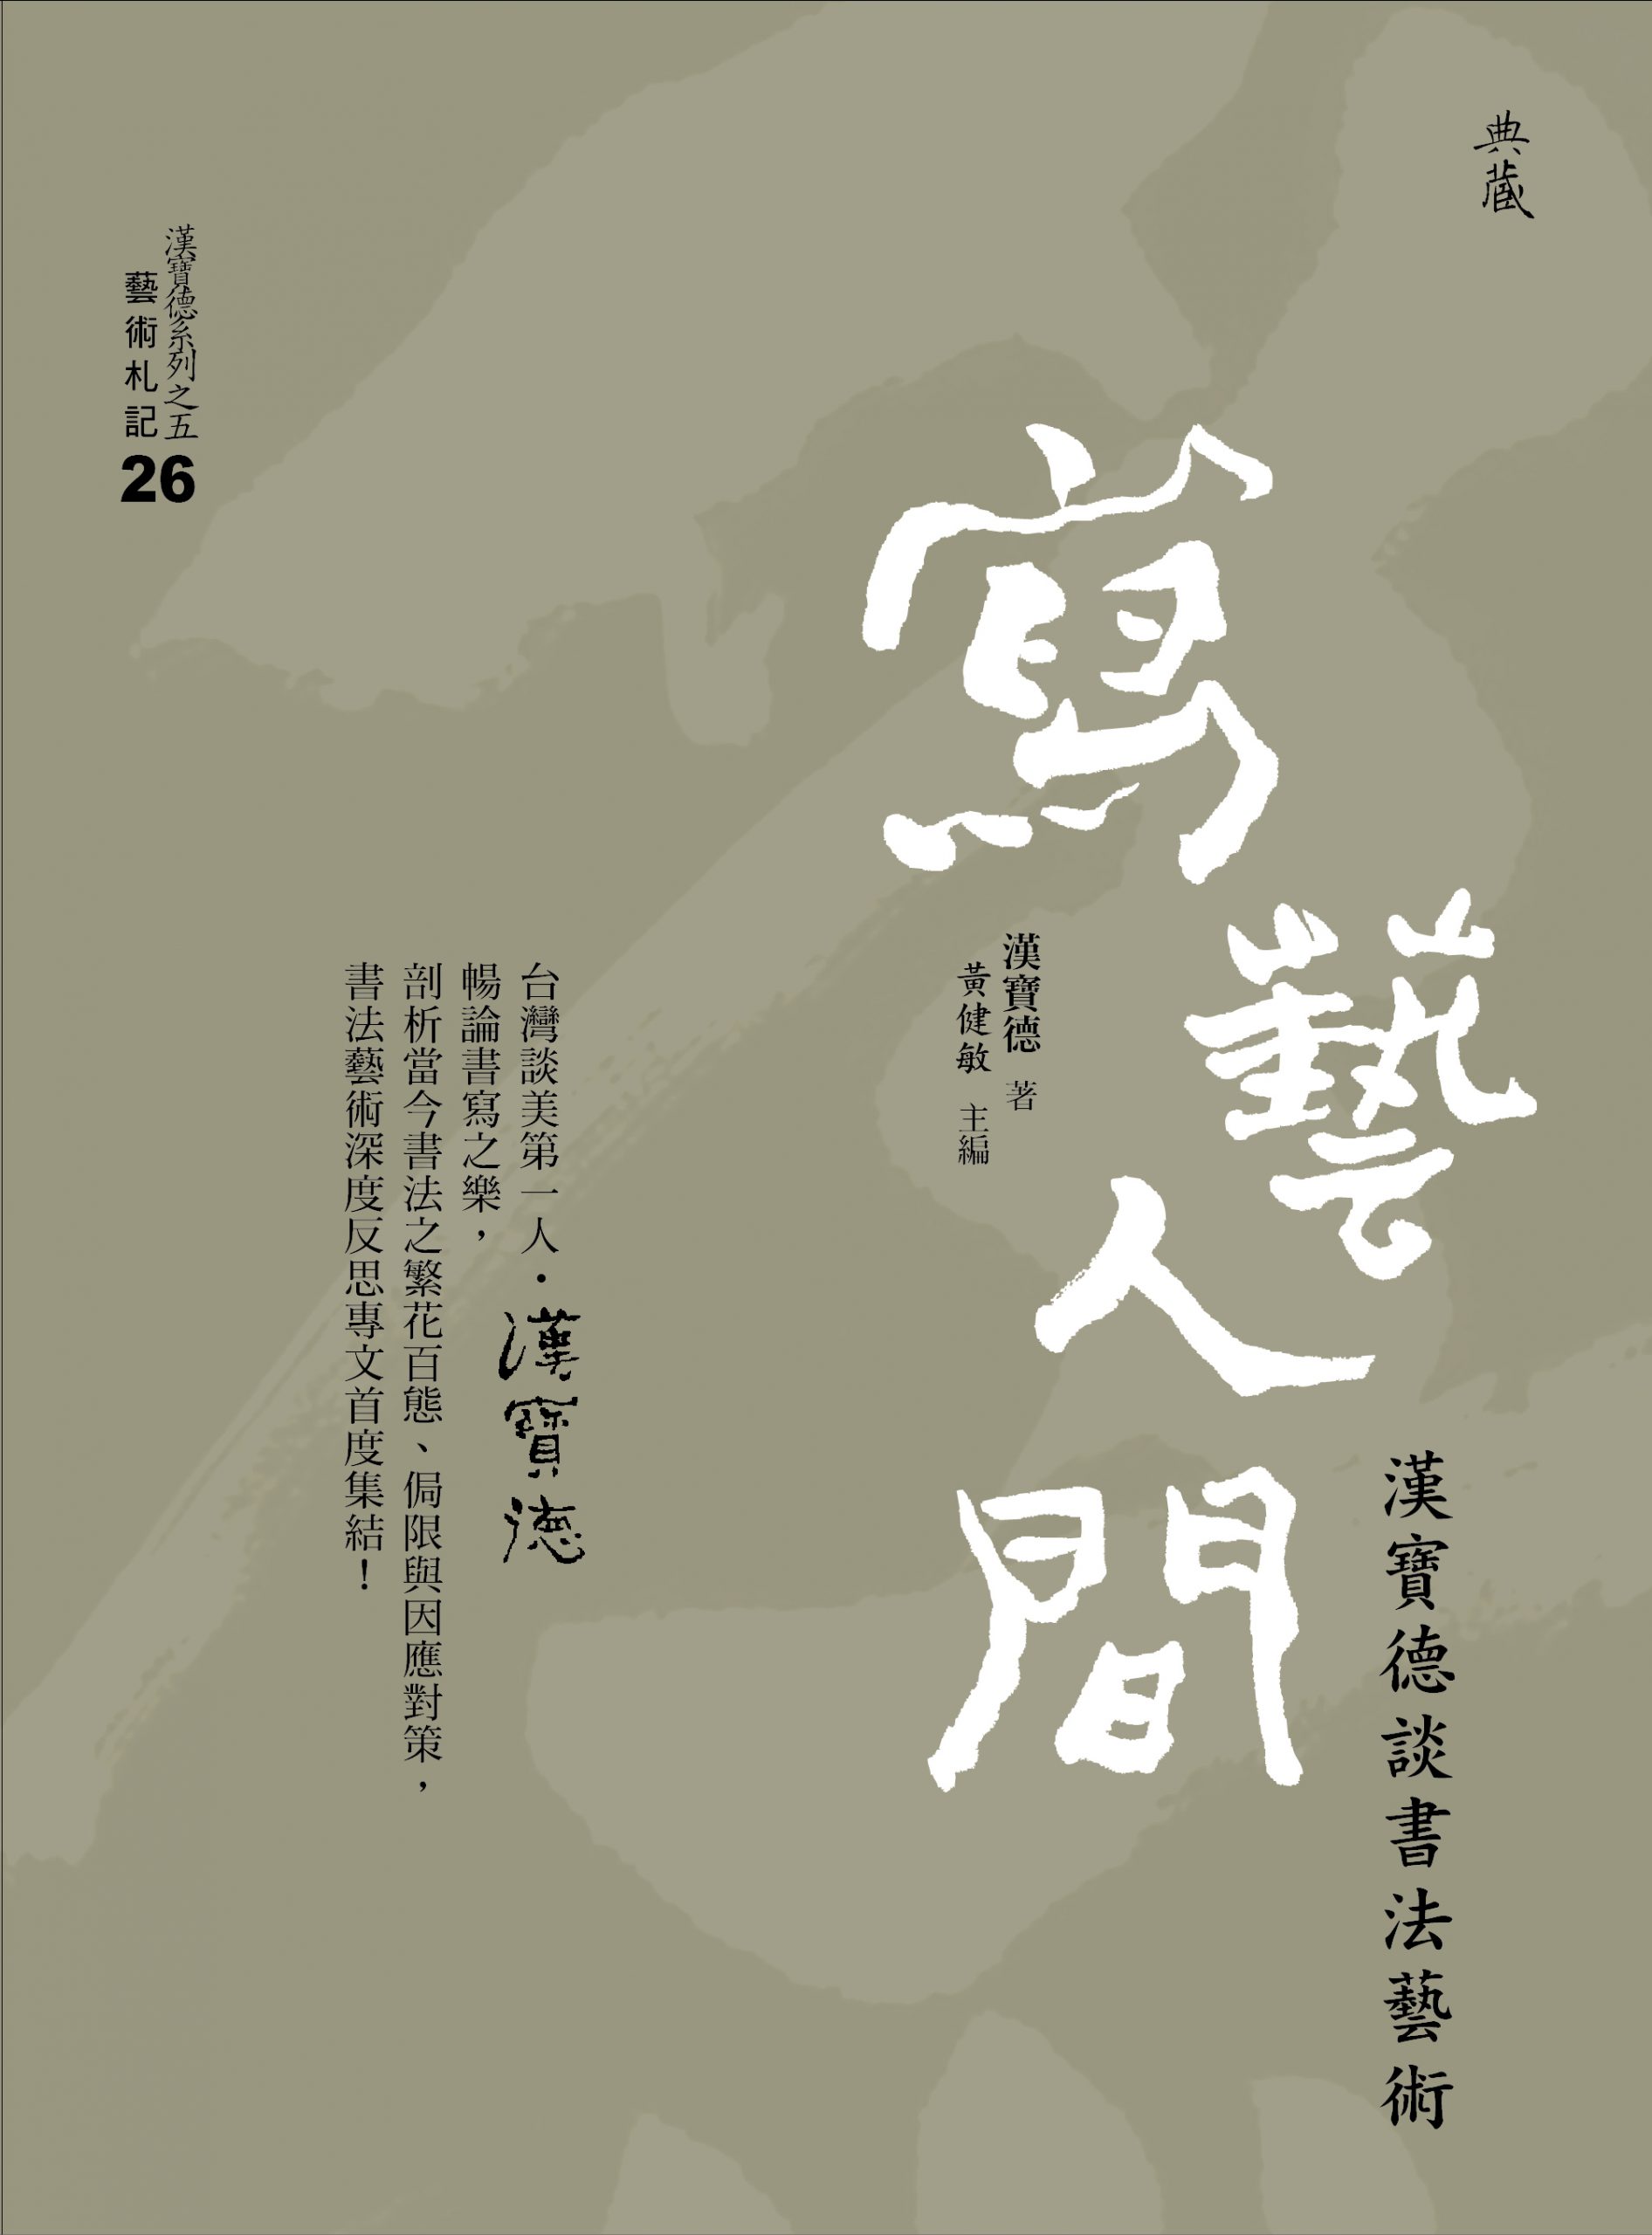 Books　典藏藝術出版　寫藝人間：漢寶德談書法藝術|　Artco